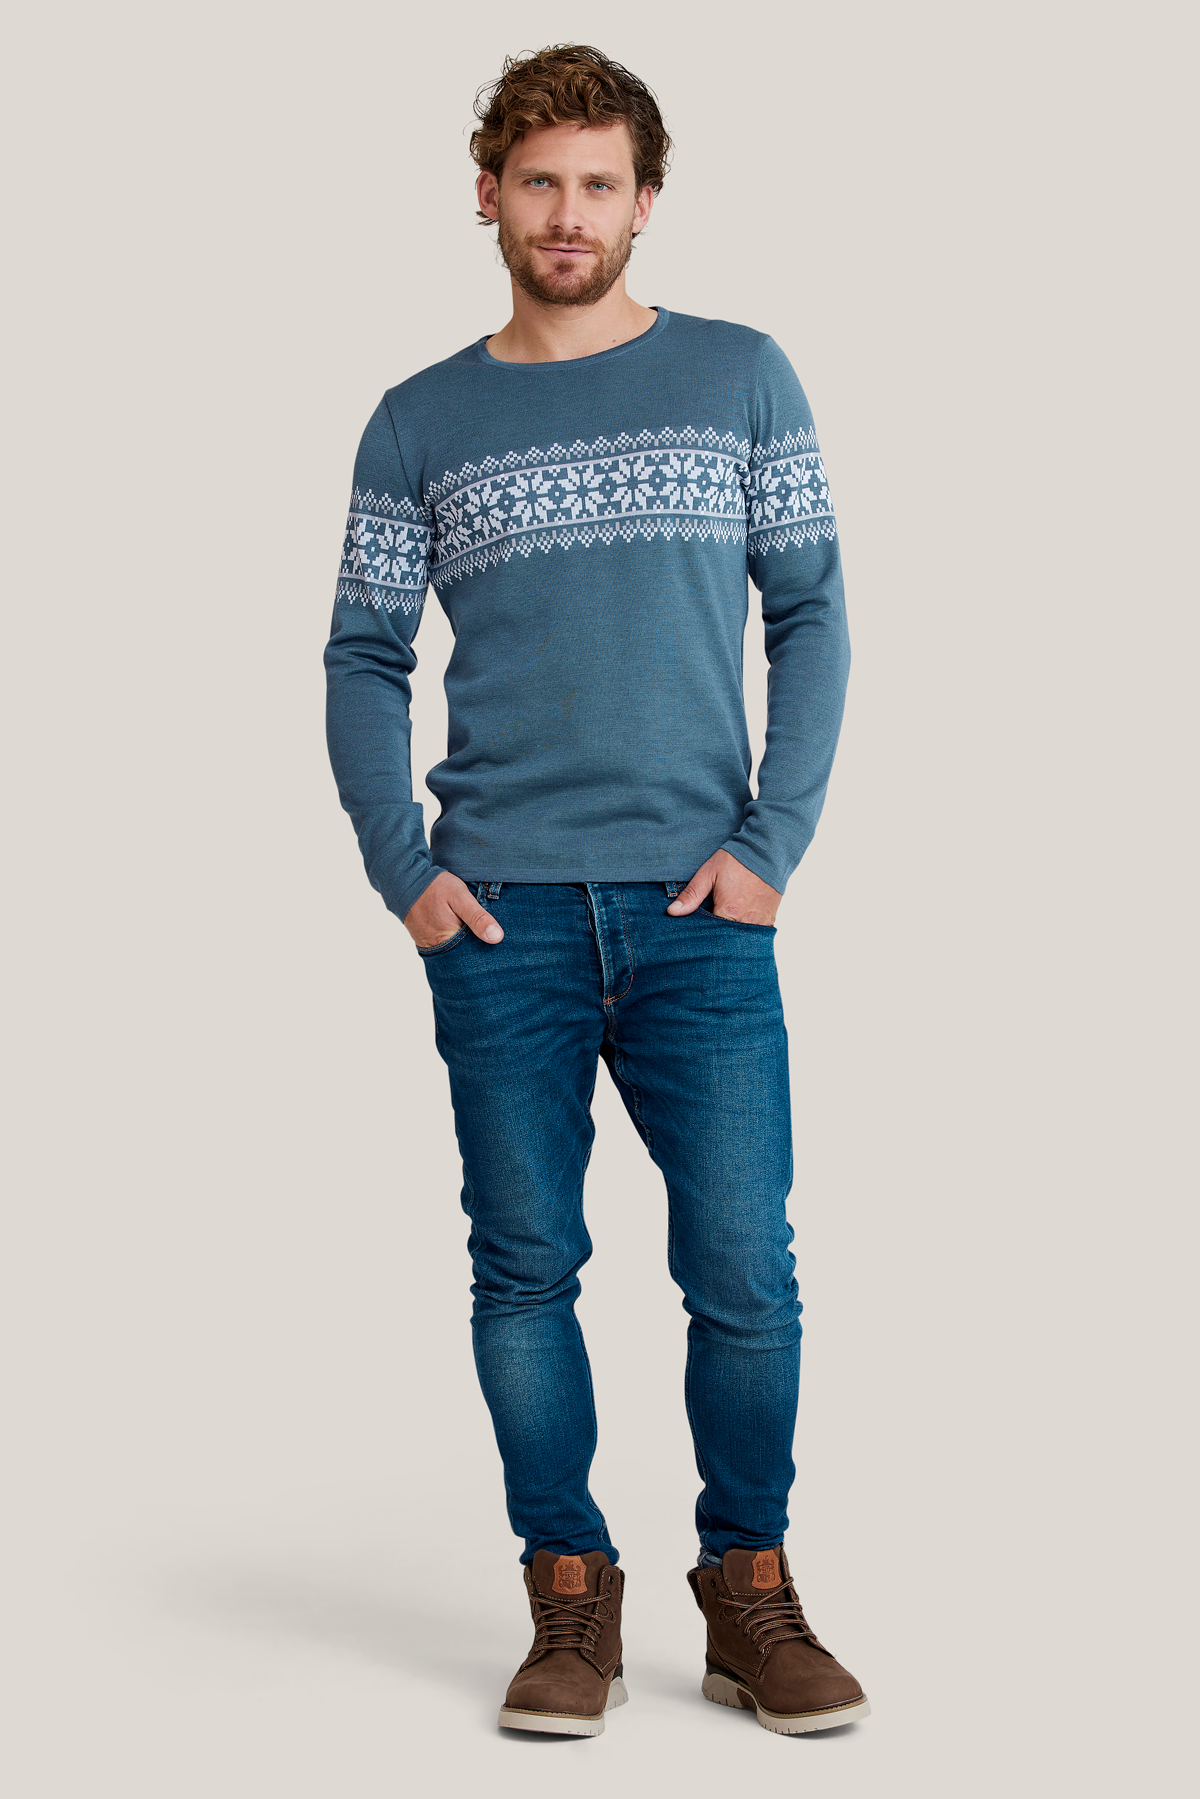 Gray-blue sweater Axel made of Merino &amp; Tencel from Tidløs